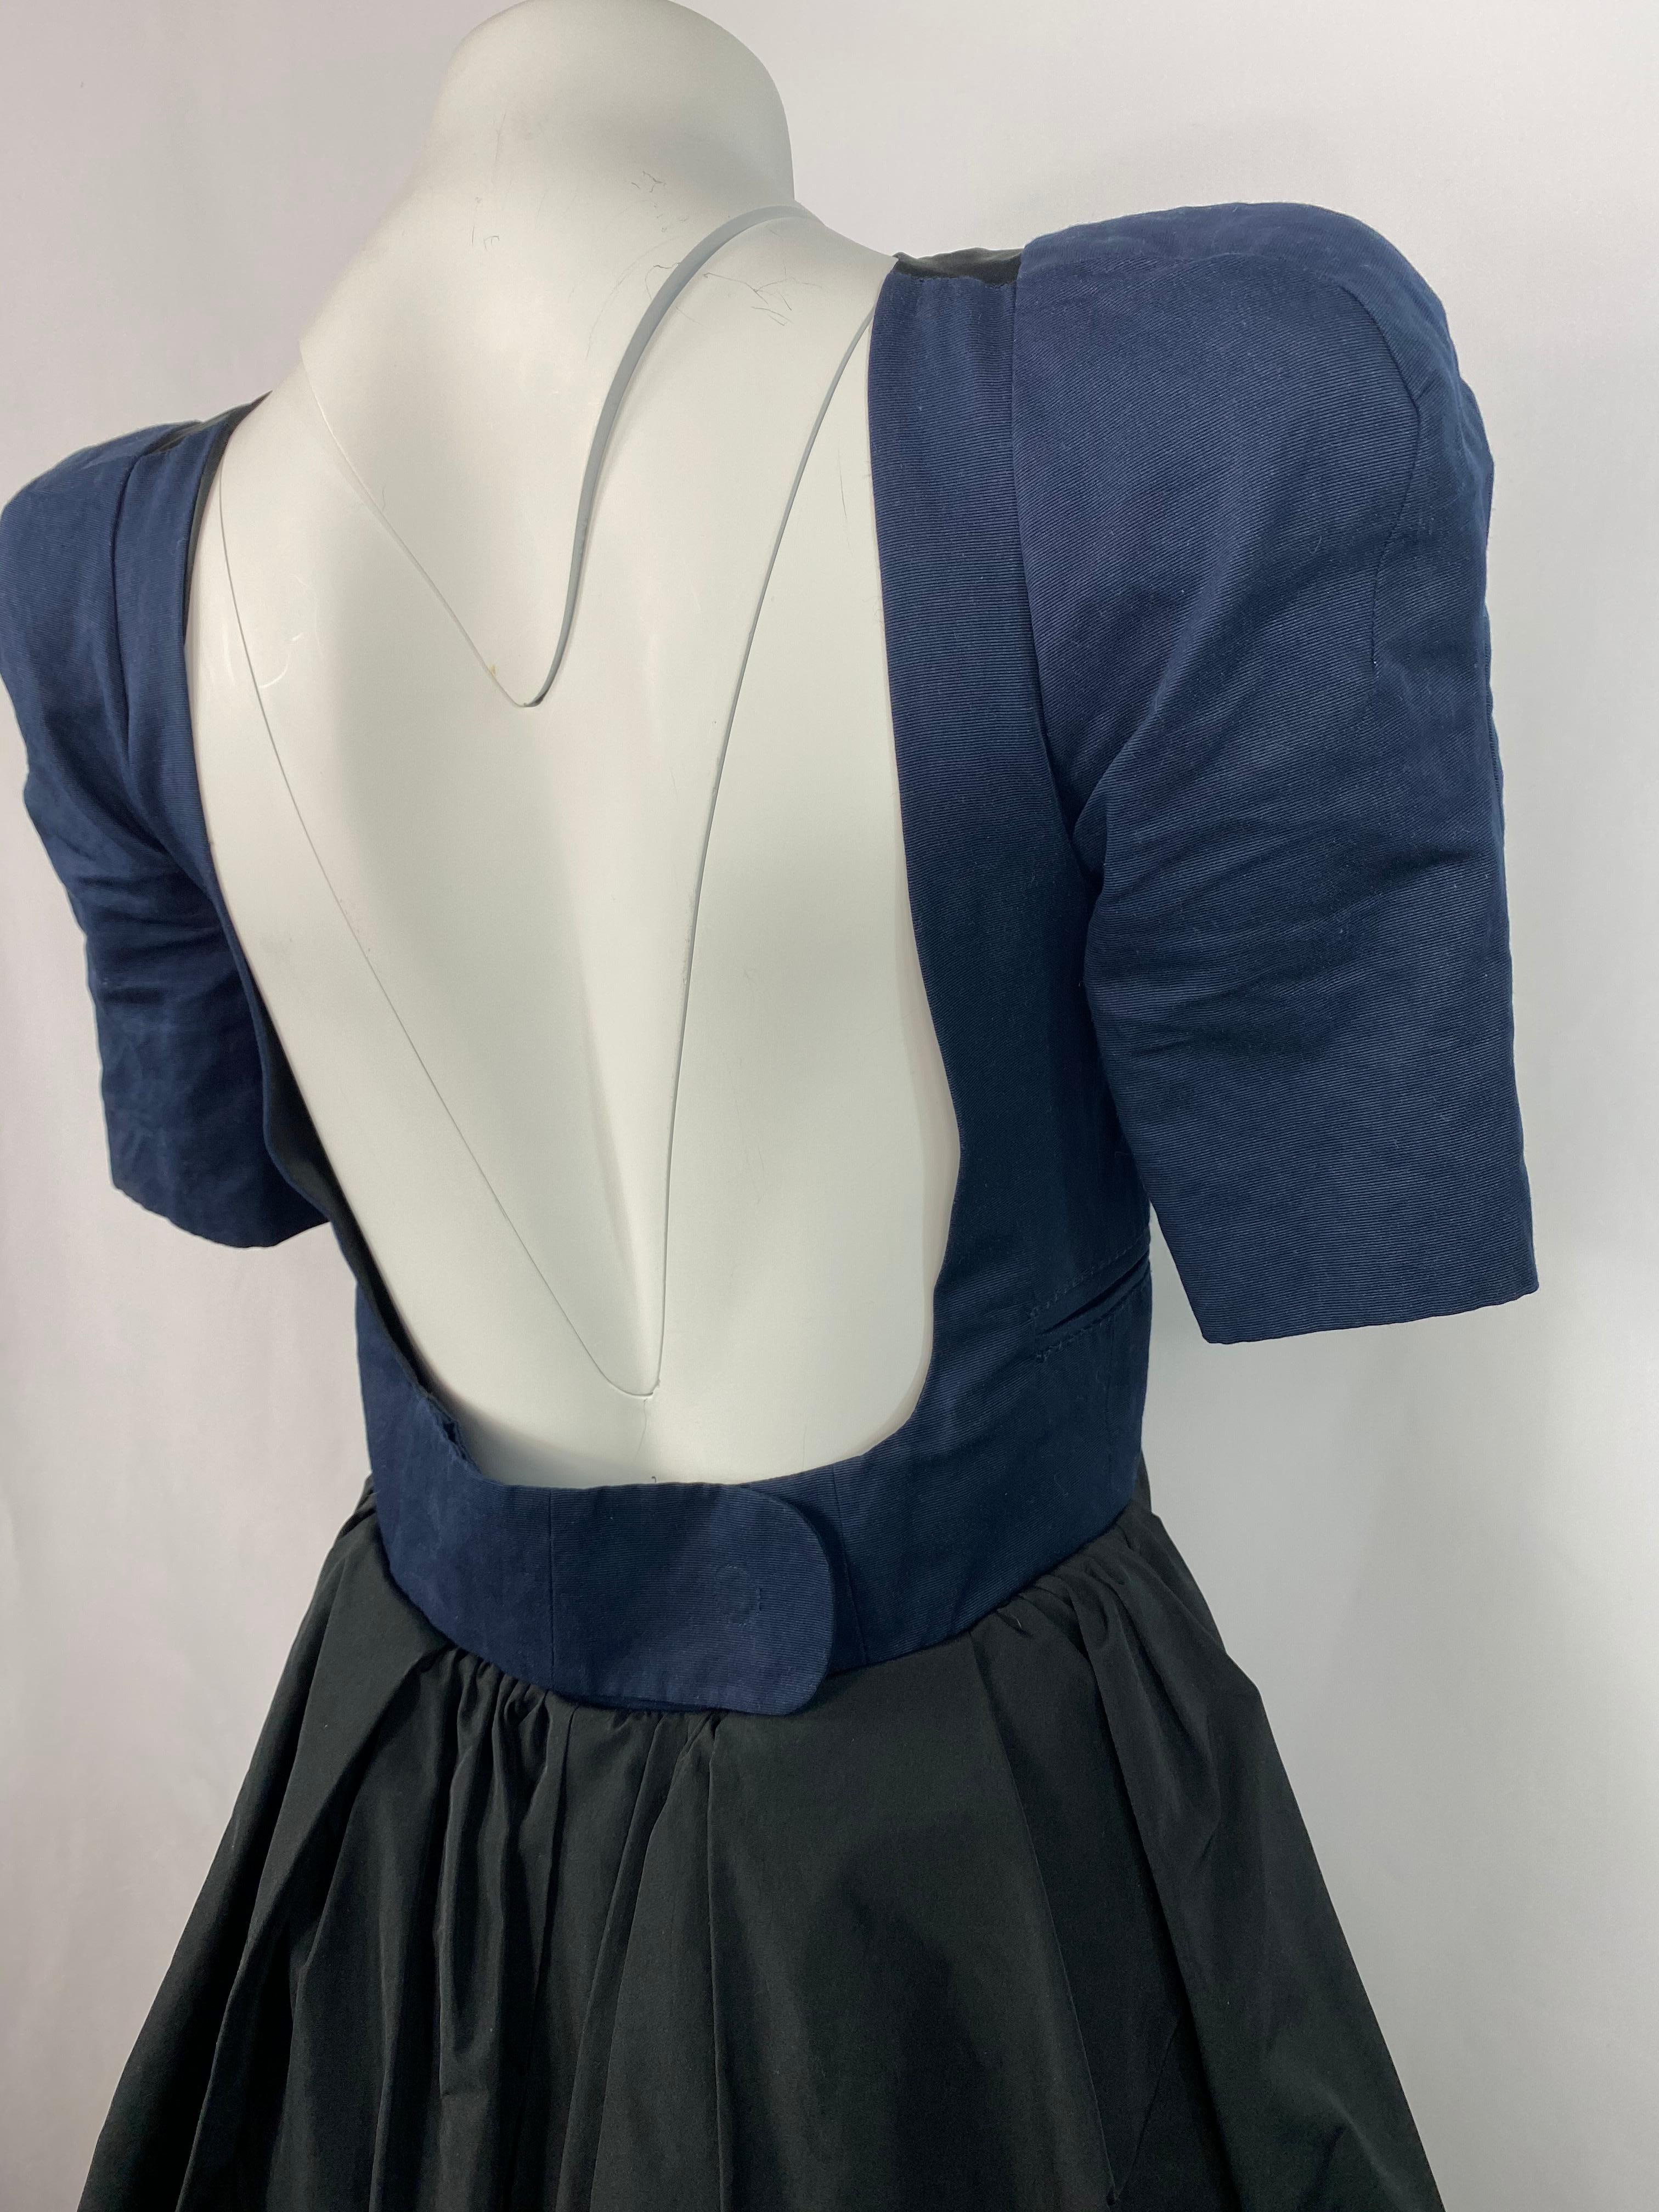 Vintage Carven Navy and Black Short Sleeve Mini Dress w/ Open Back  For Sale 1